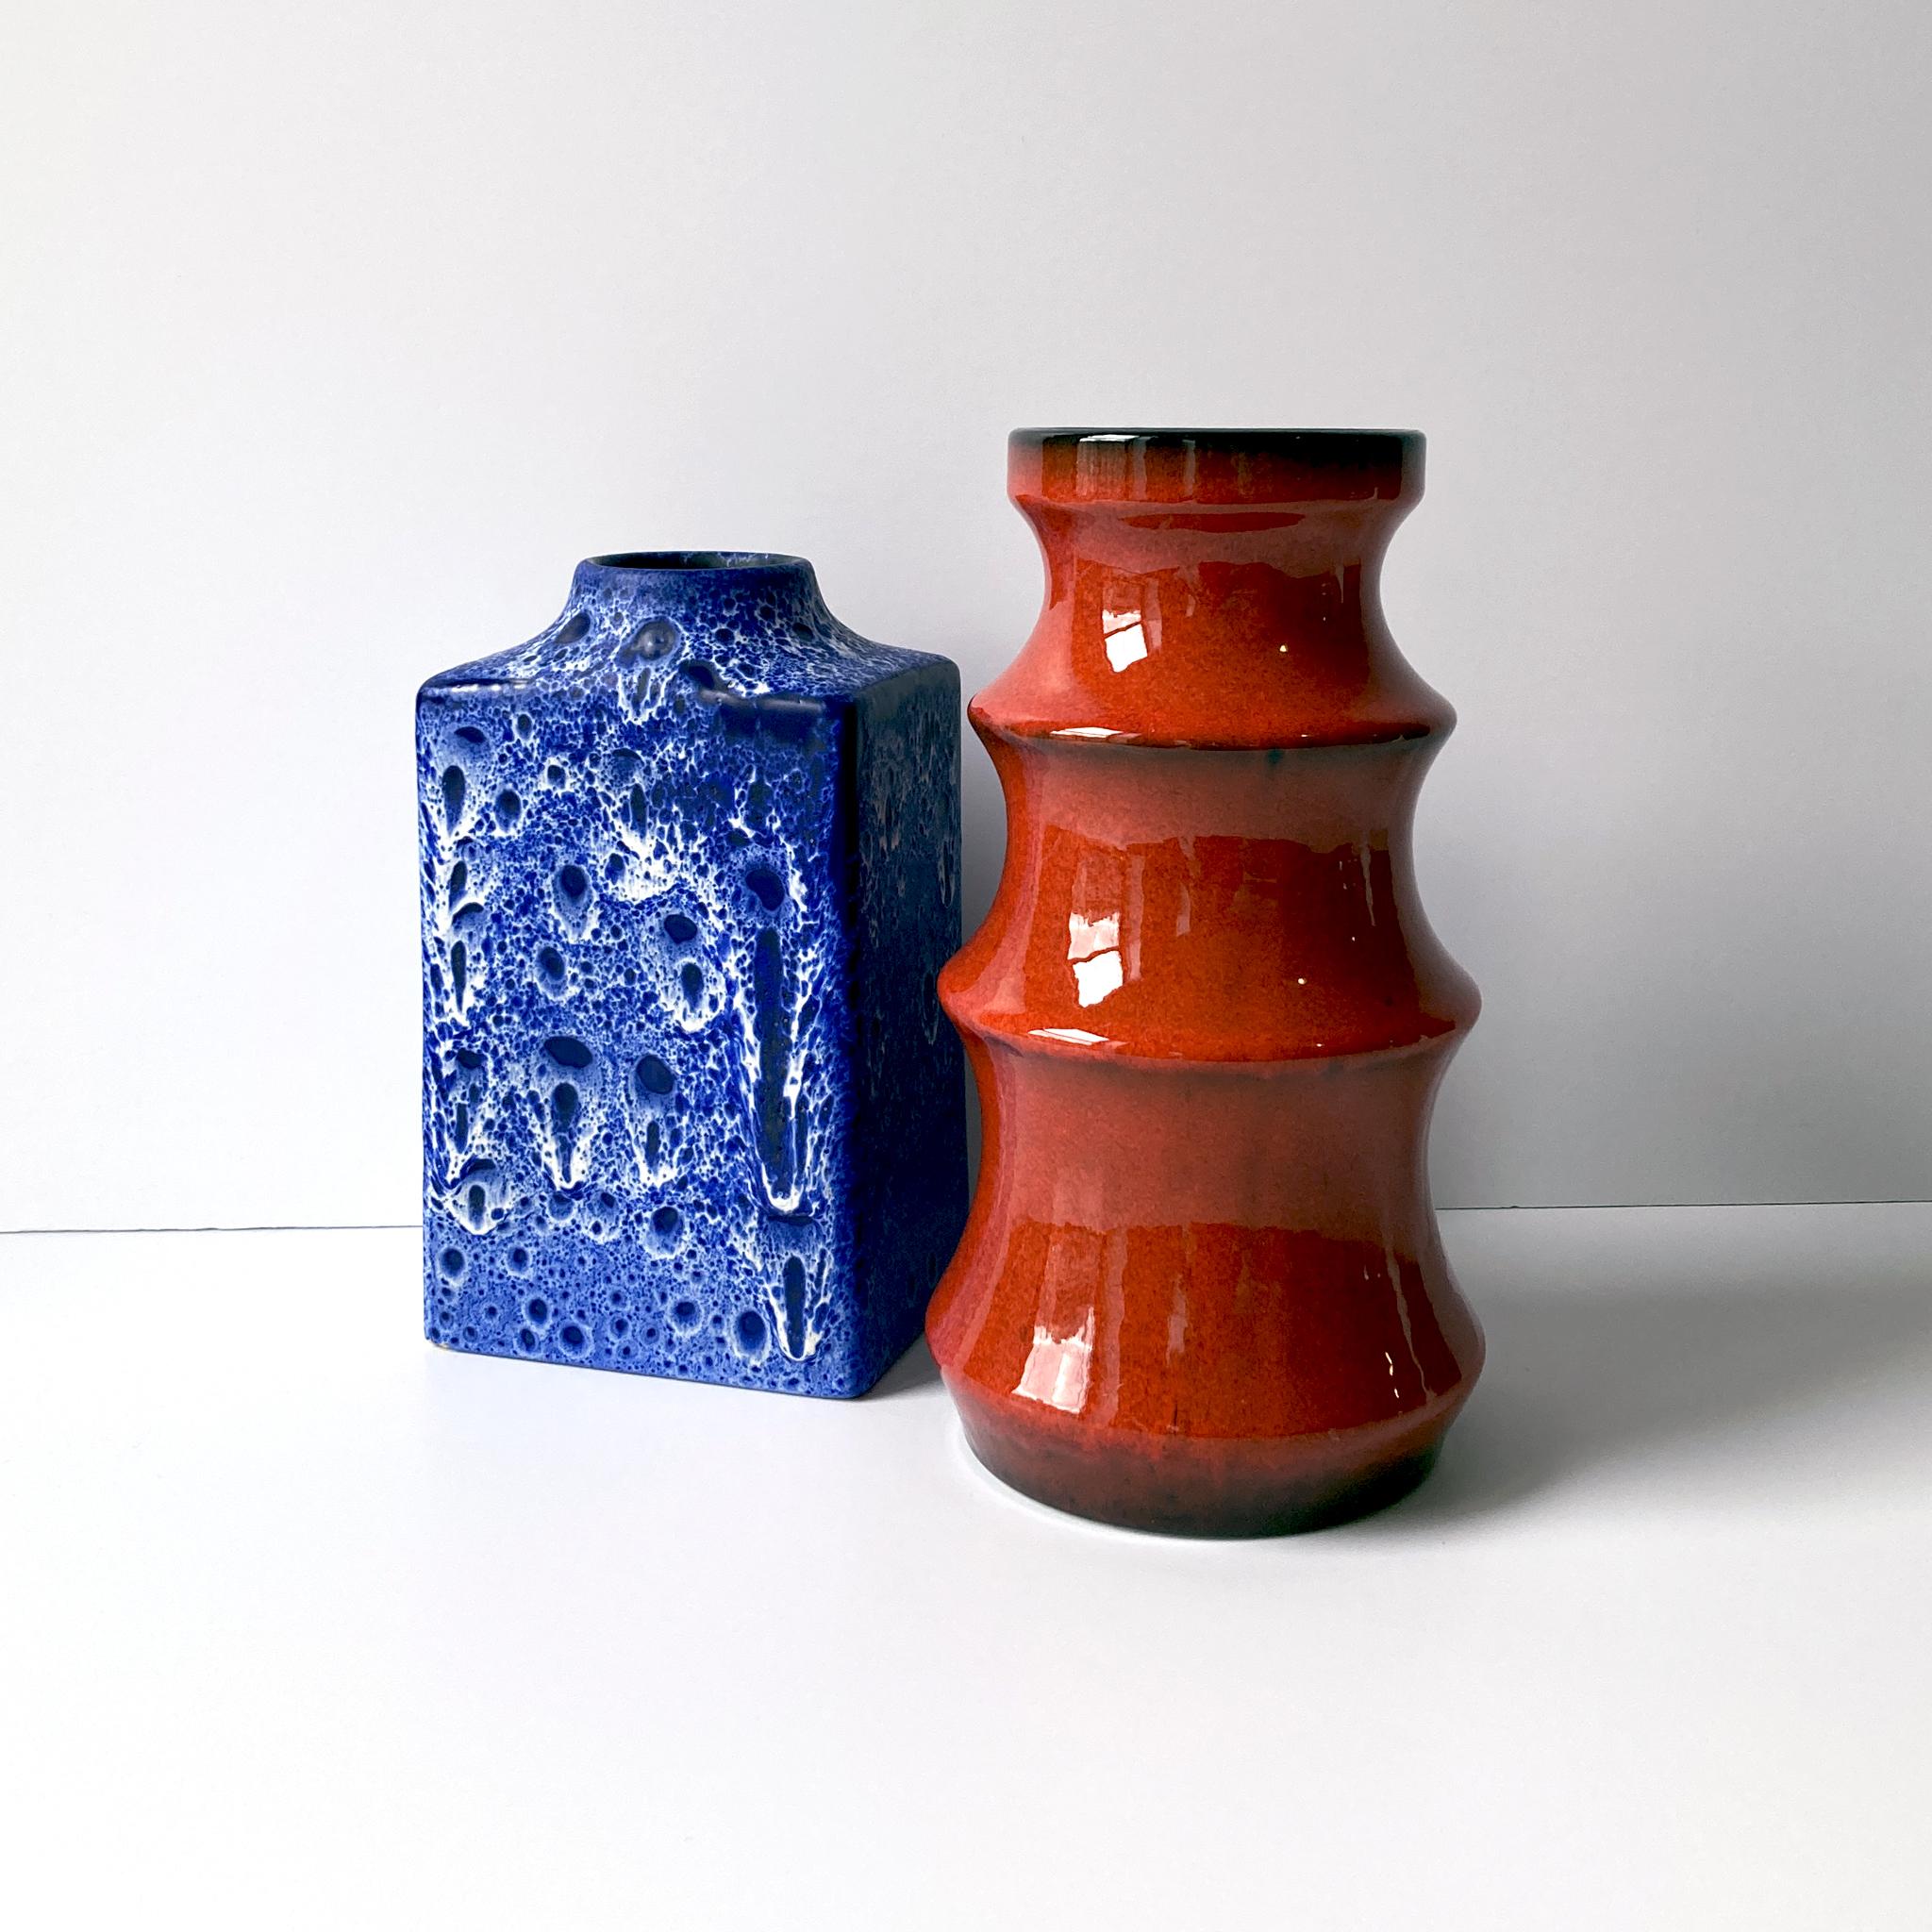 Bay Keramik tiered vase in a stunning bright red orange glaze with black interior, circa 1960s. Stamp on base 922-25.

Measurements:
H 10